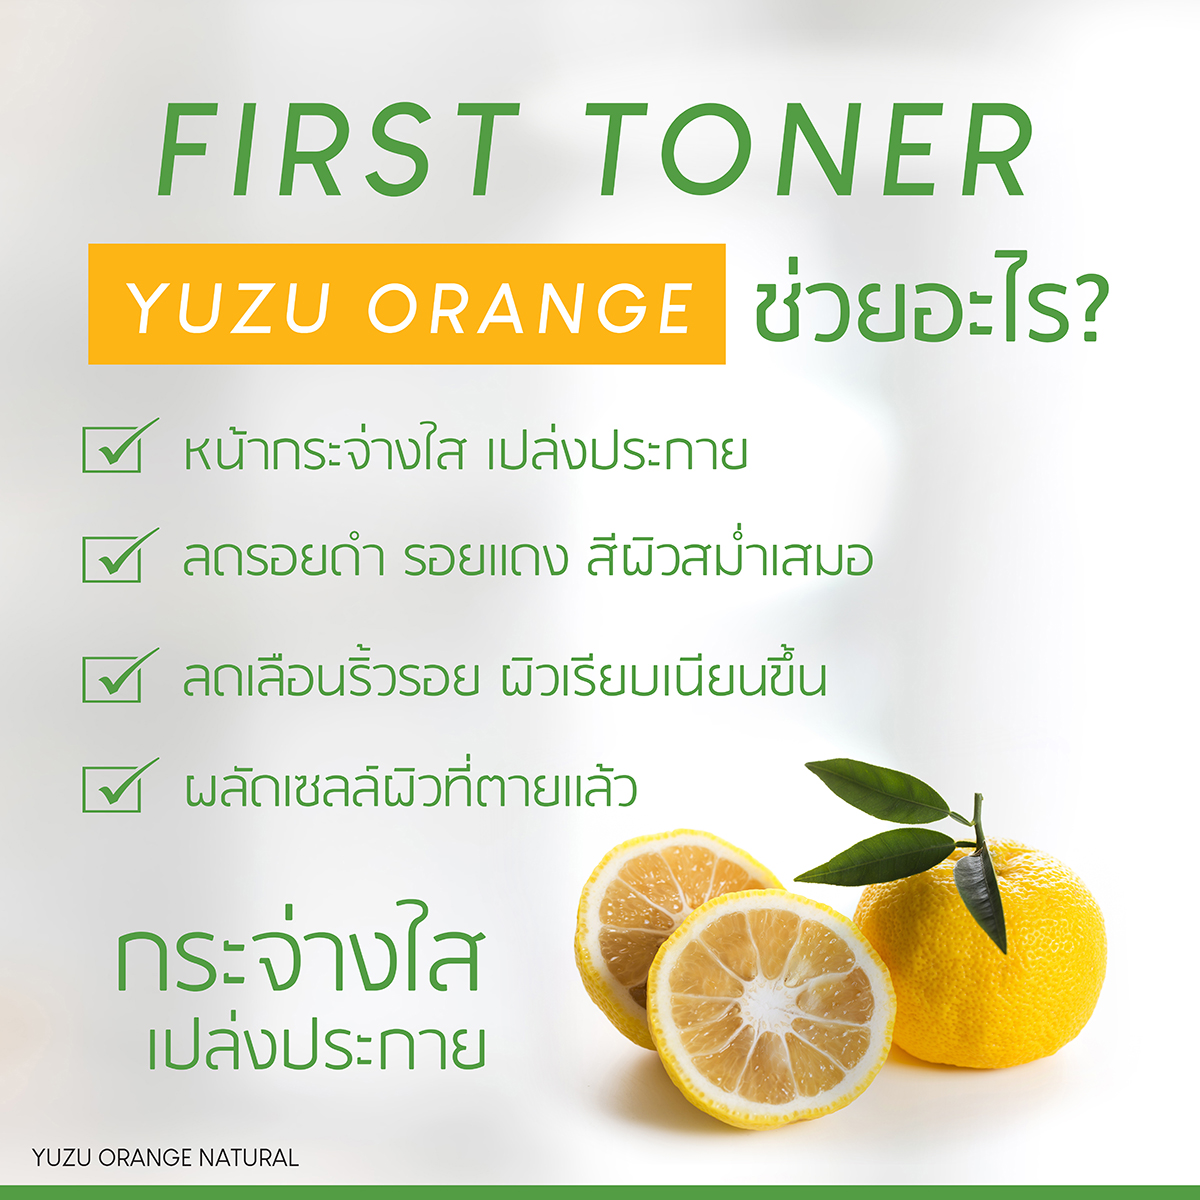 Plantnery Yuzu Orange First Toner 250ml โทนเนอร์ วิตามินซี เข้มข้น จากส้มยูซุ ที่ช่วยลดเลือนผิวหมองคล้ำ ทำให้ผิวดูกระจ่างใสภายใน 7 วัน